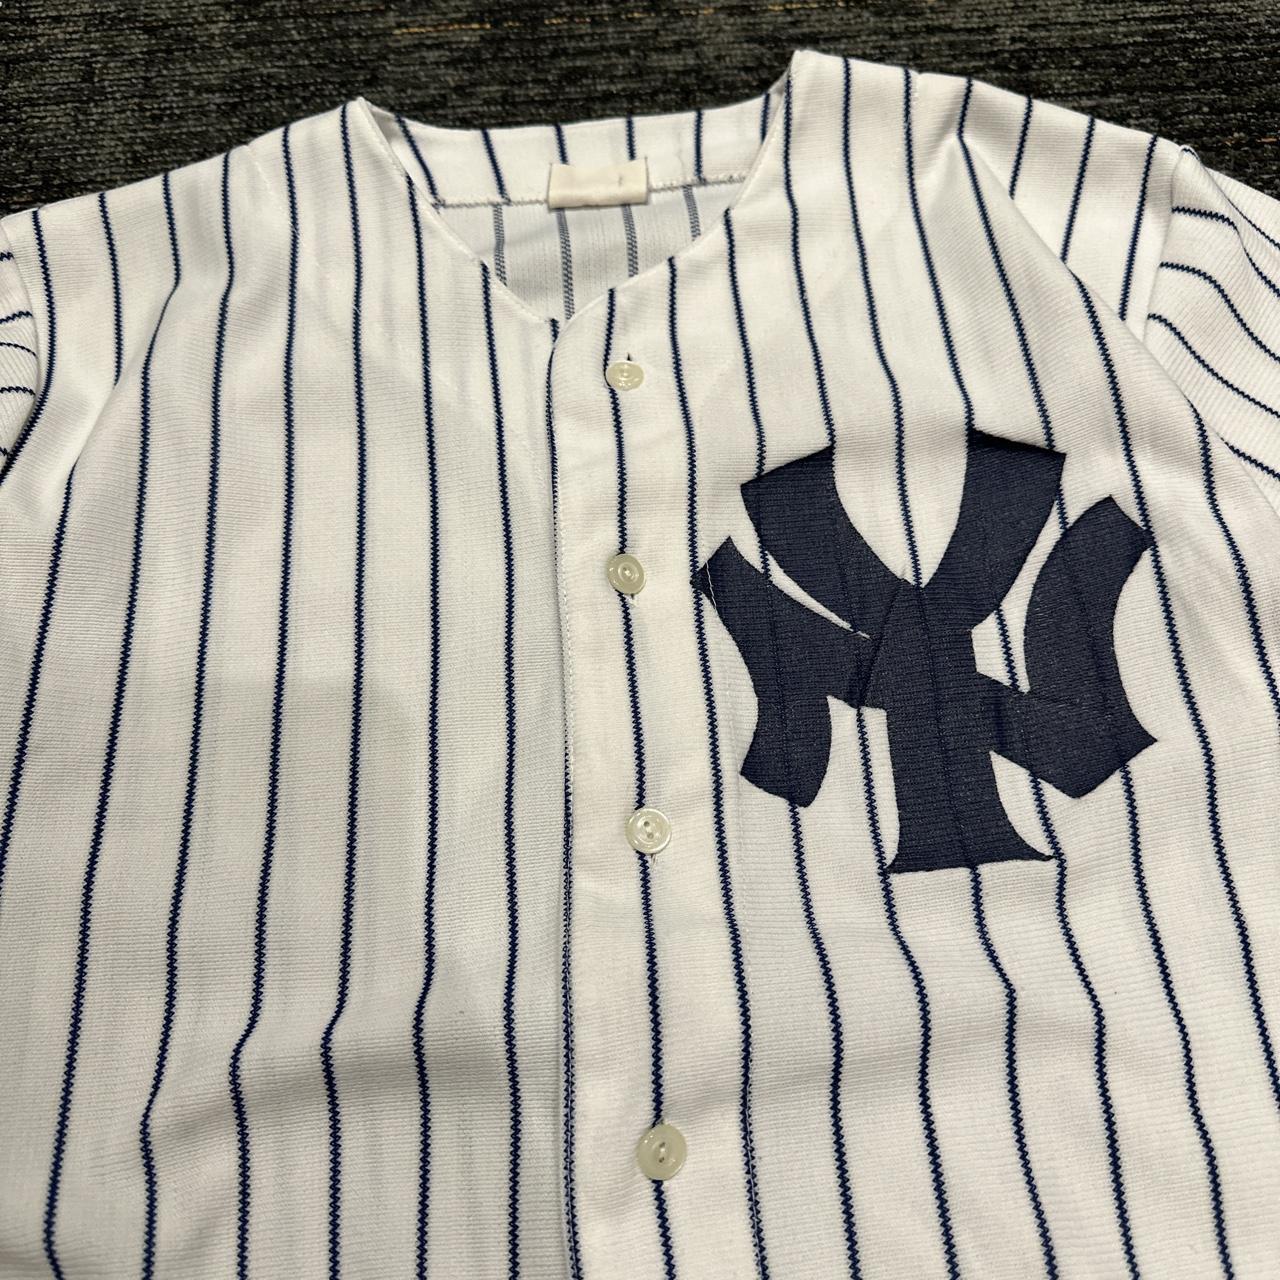 Vintage 80s/90s New York Yankees Jersey - Size... - Depop